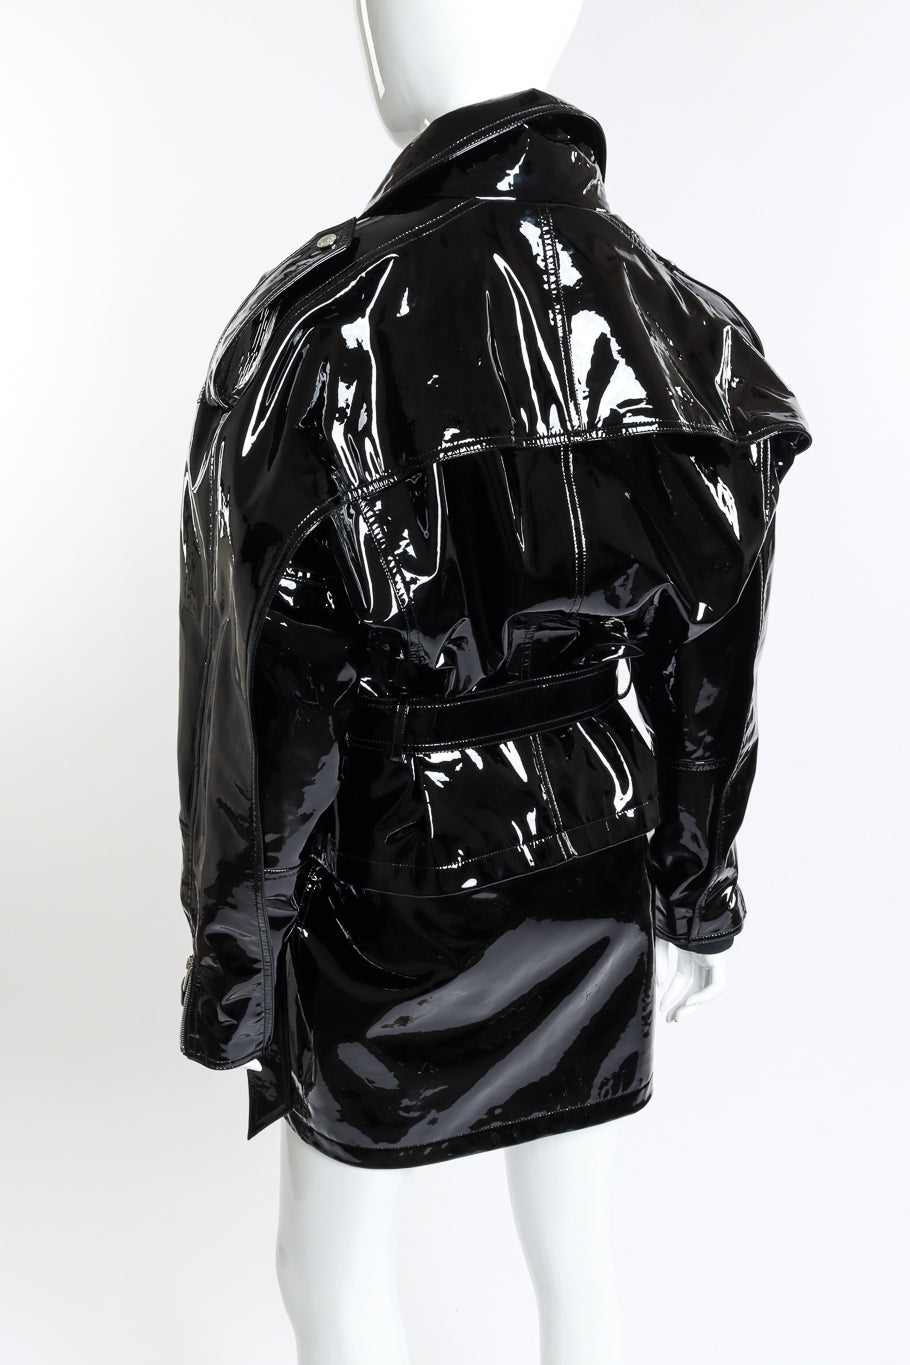 Biker Dress by Alexandre Vauhtier back mannequin @RECESS LA 